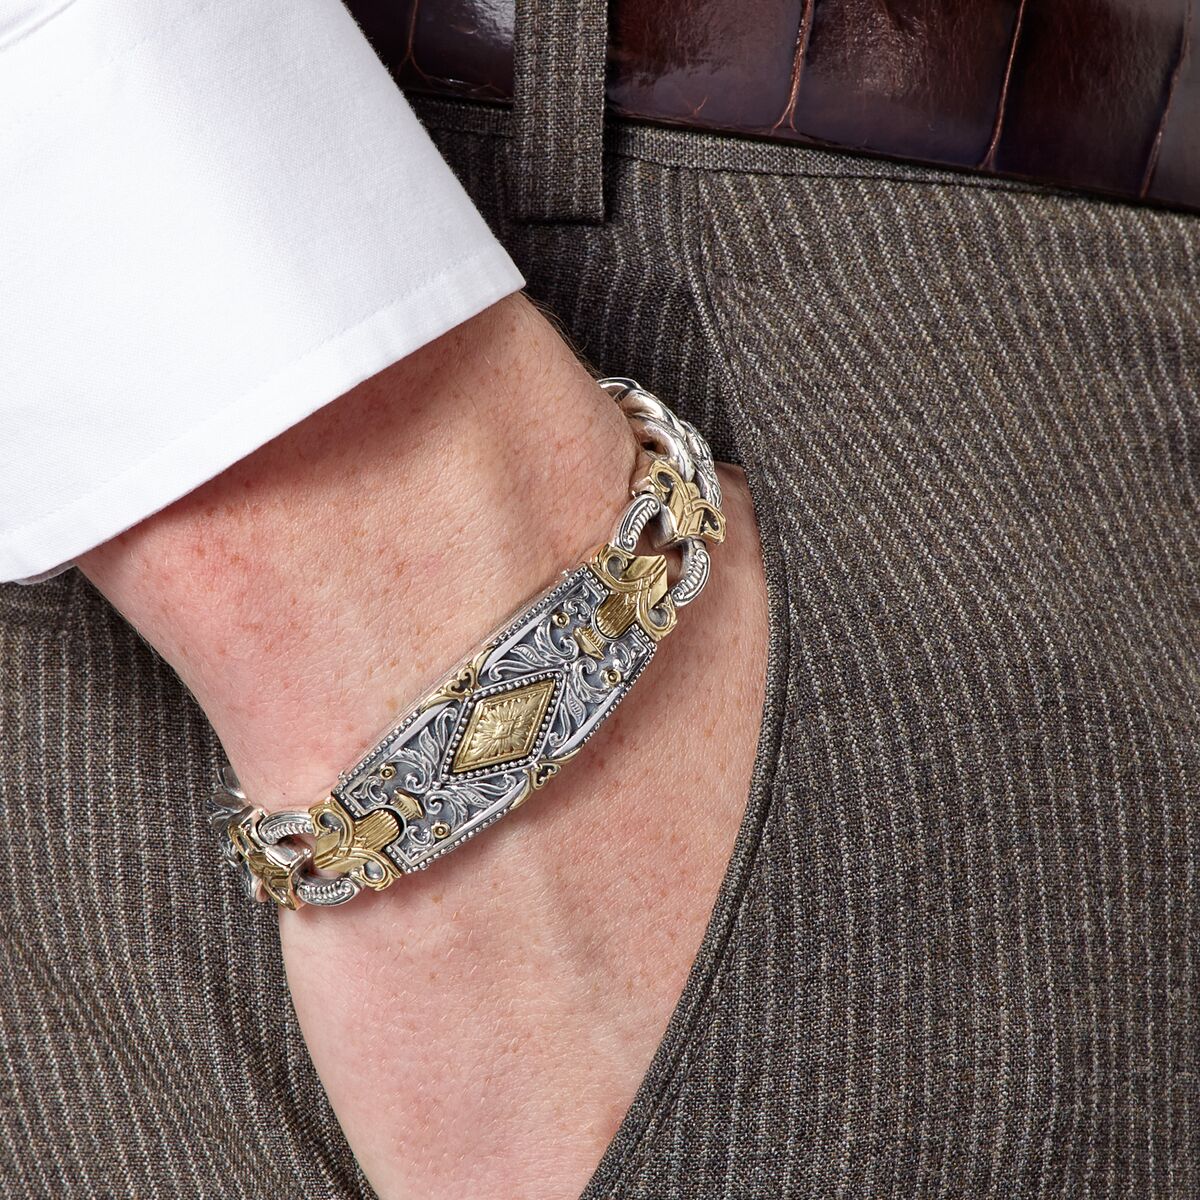 Konstantino Men's Sterling Silver & Bronze Bracelet